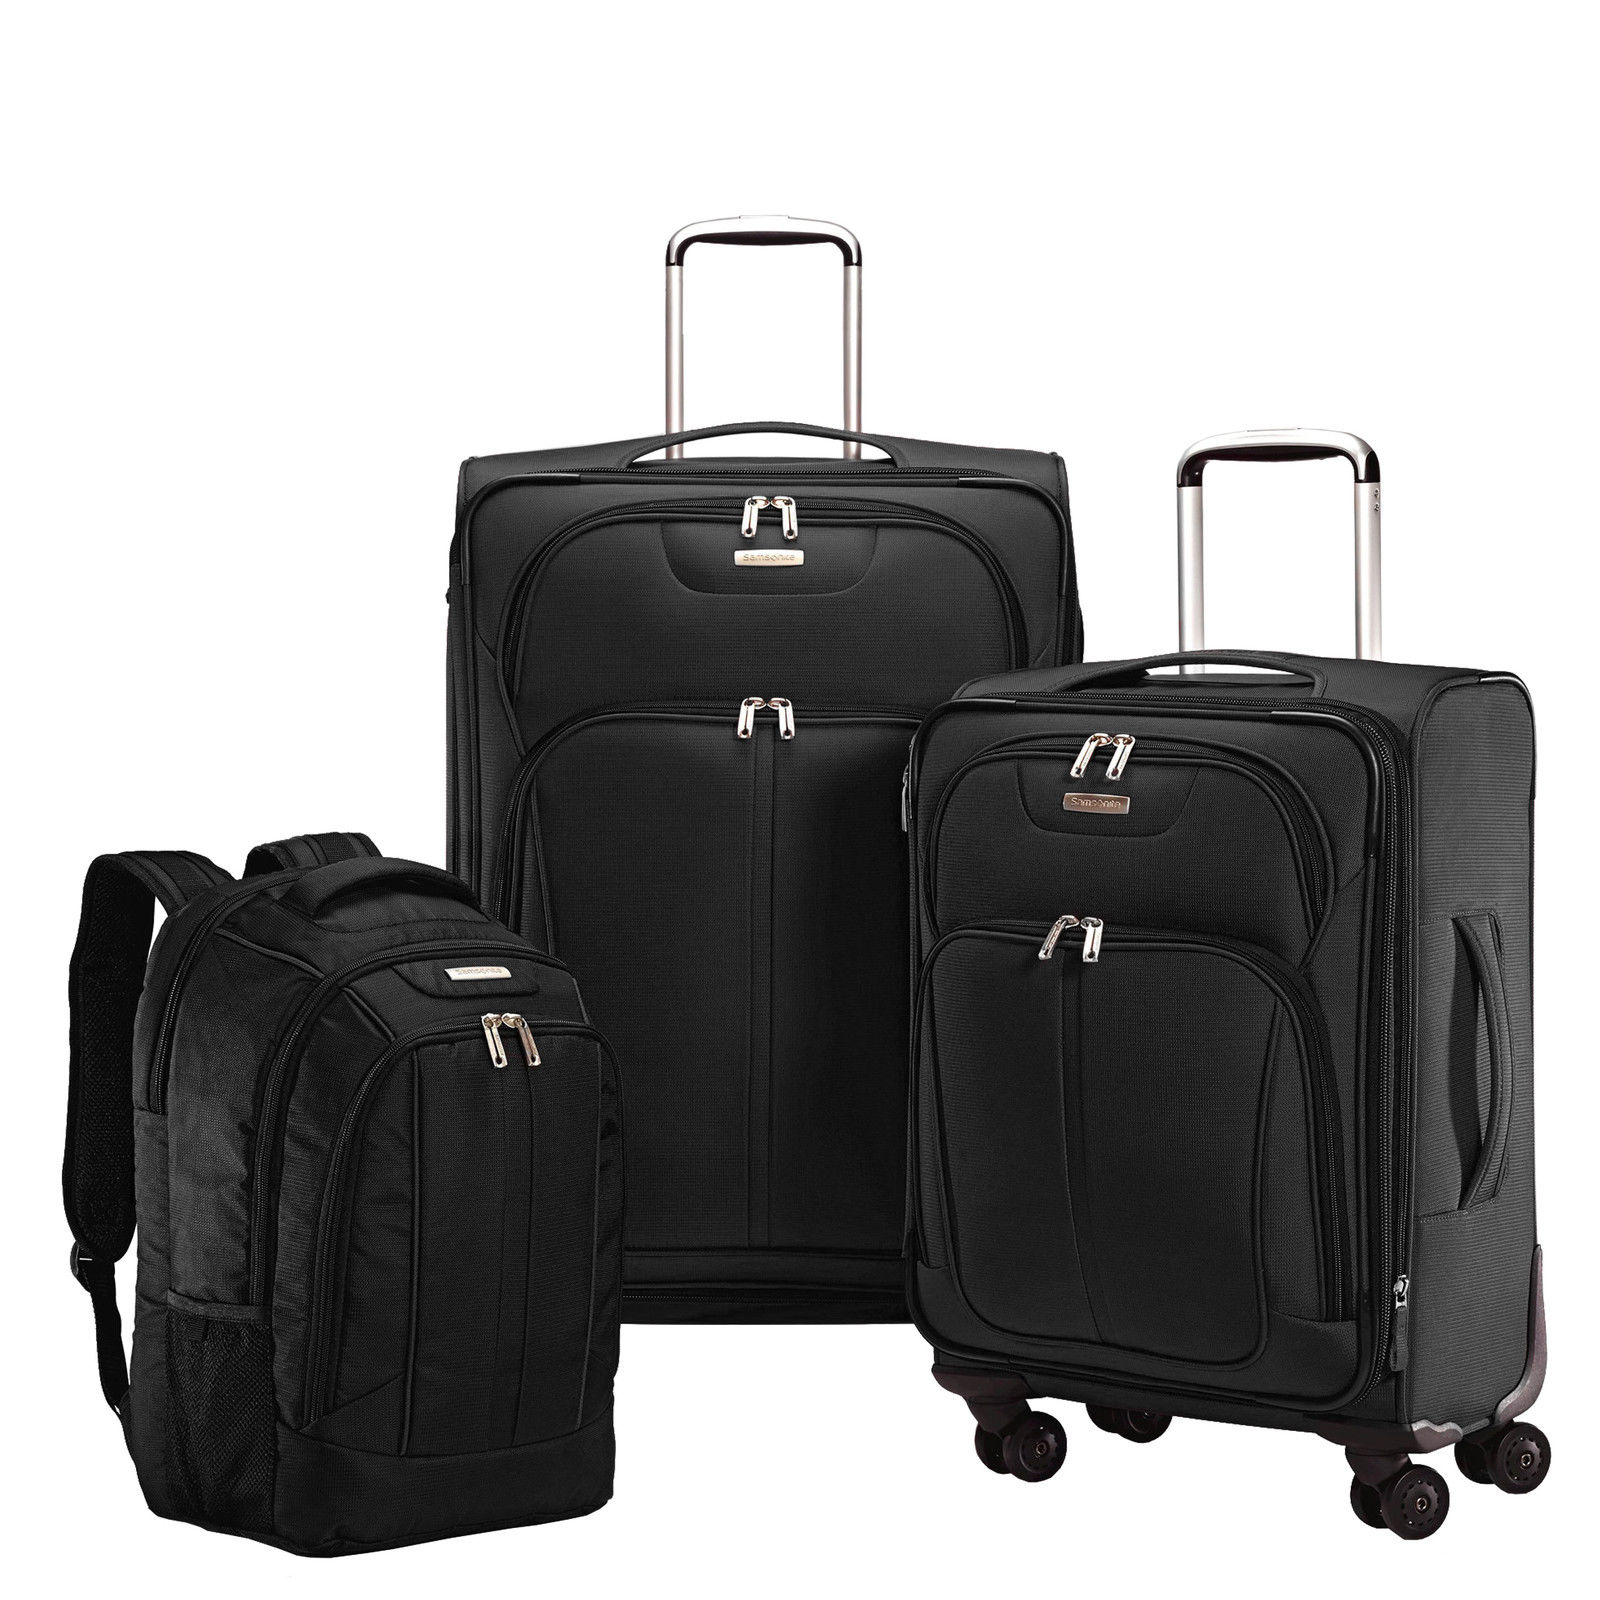 Samsonite Versa-Lite 360 3-piece luggage set for $100